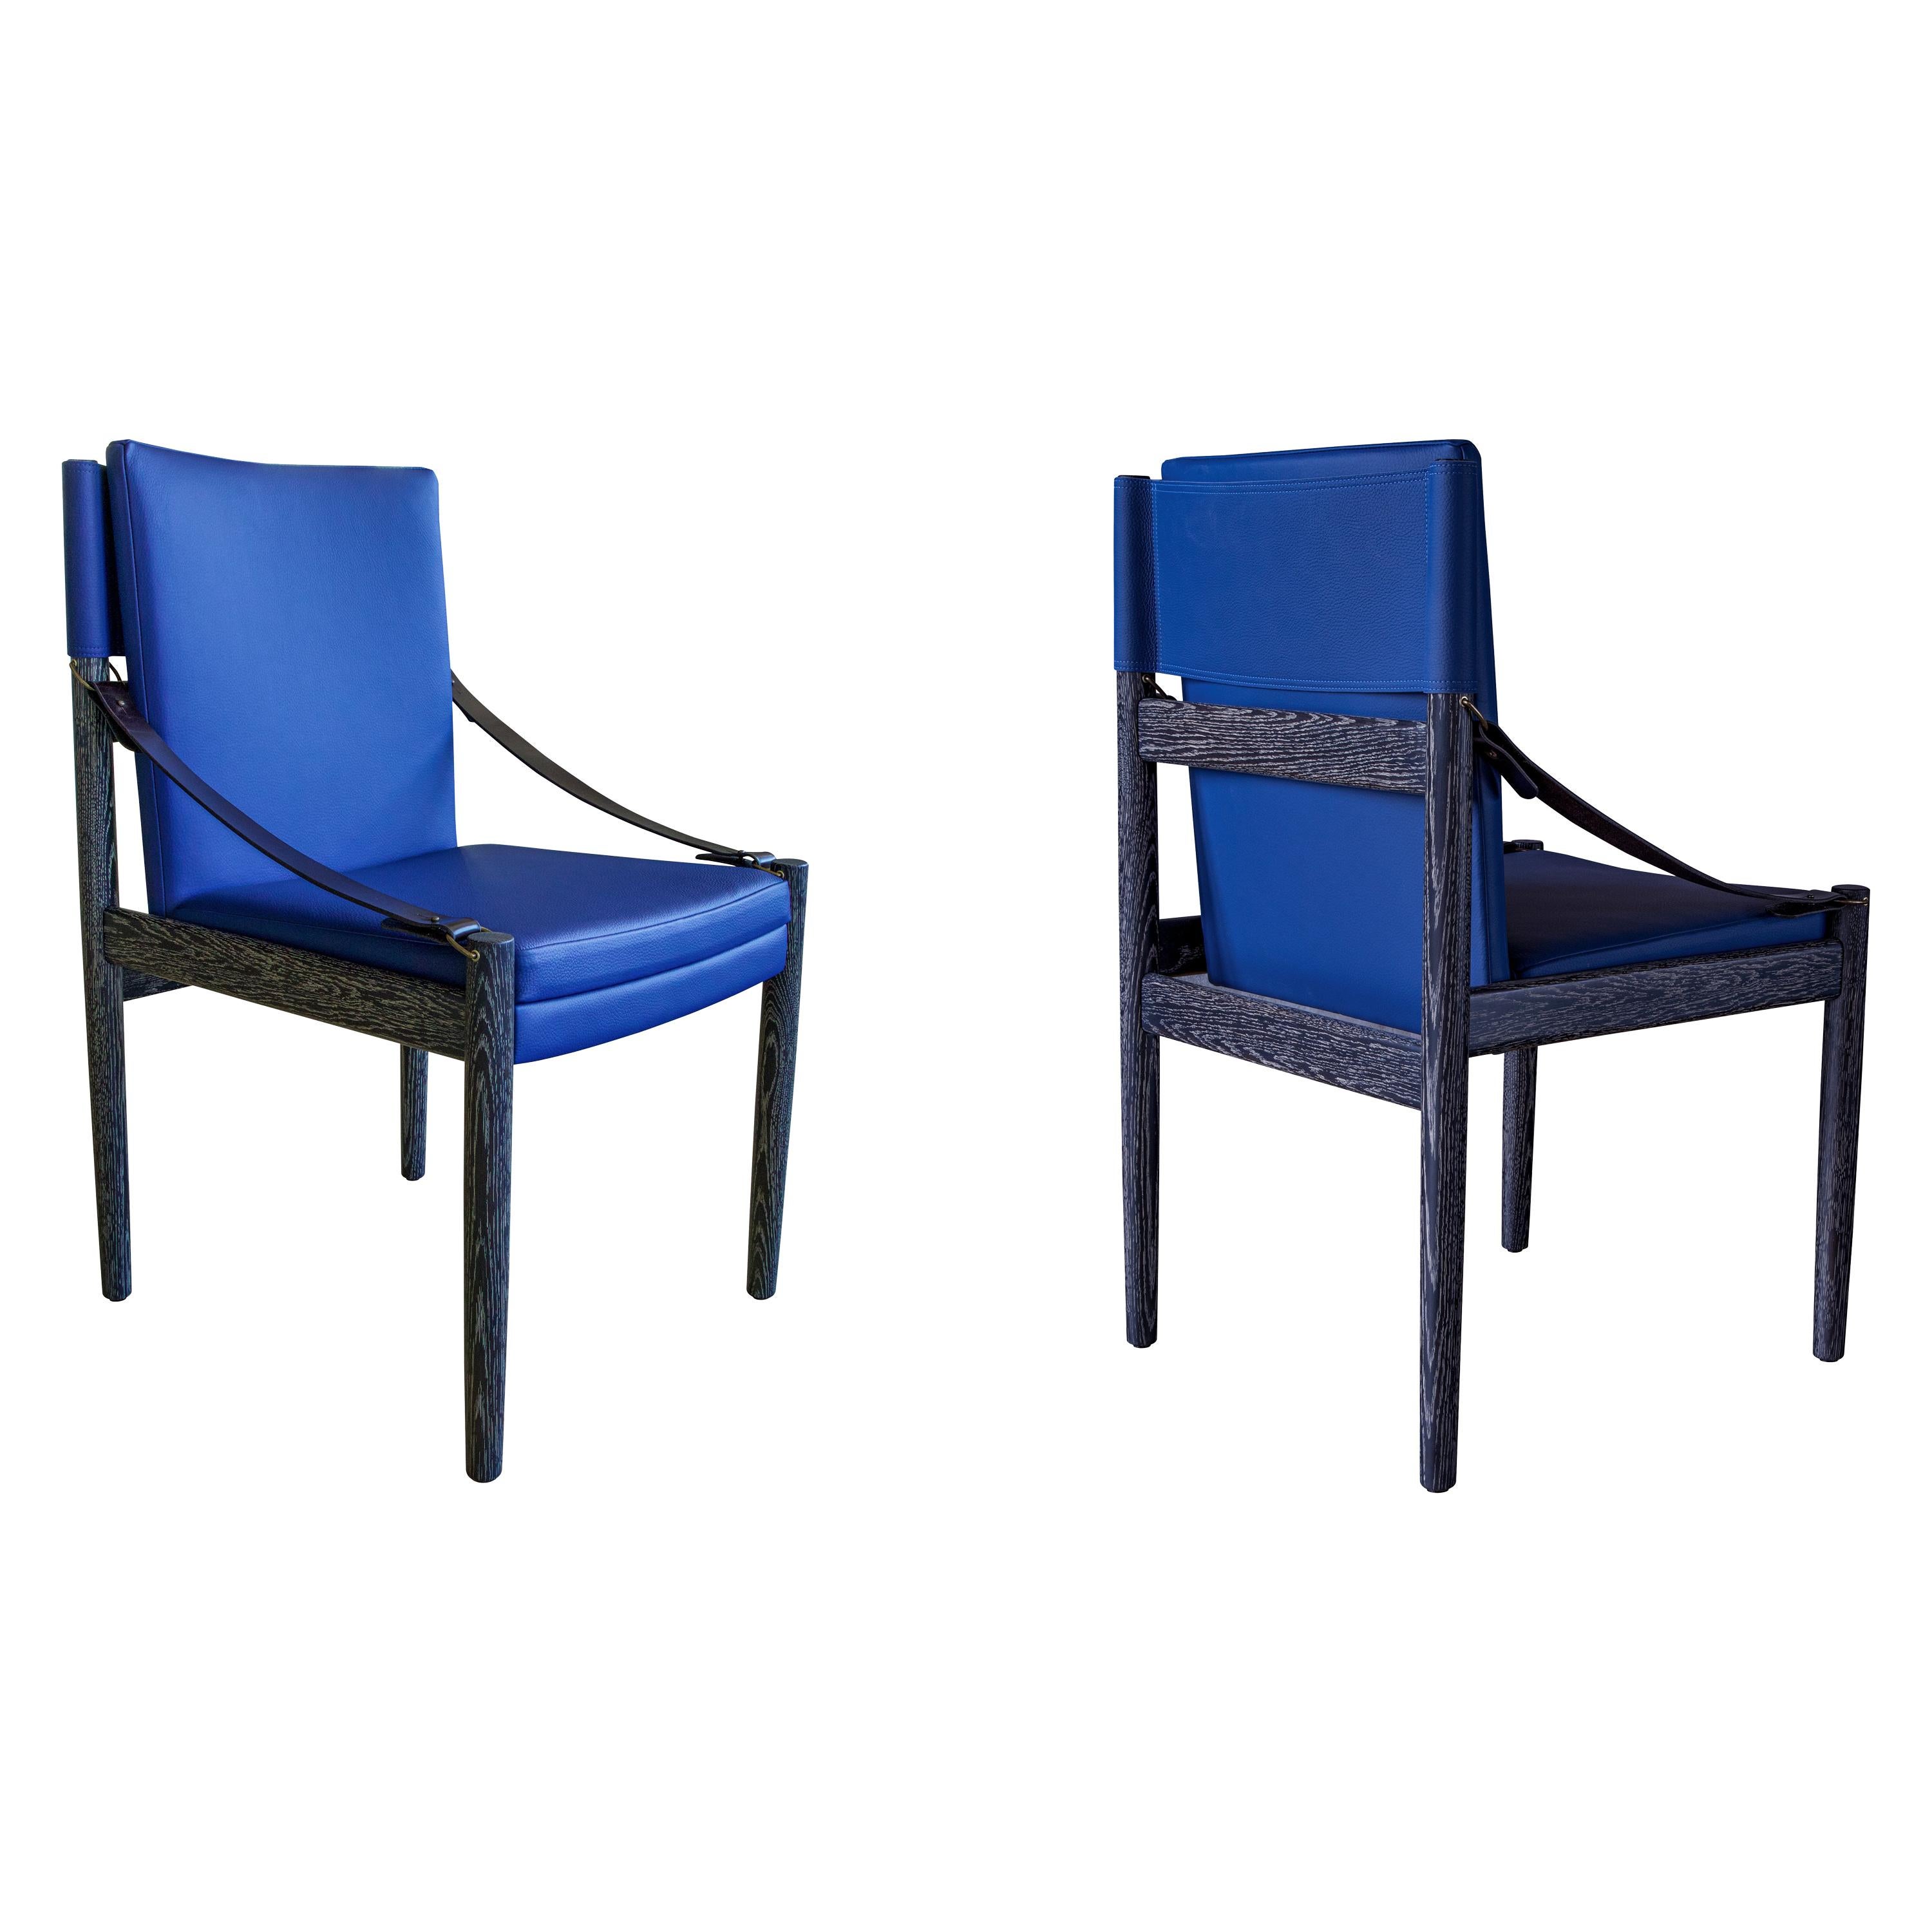 Richard Wrightman Chairs